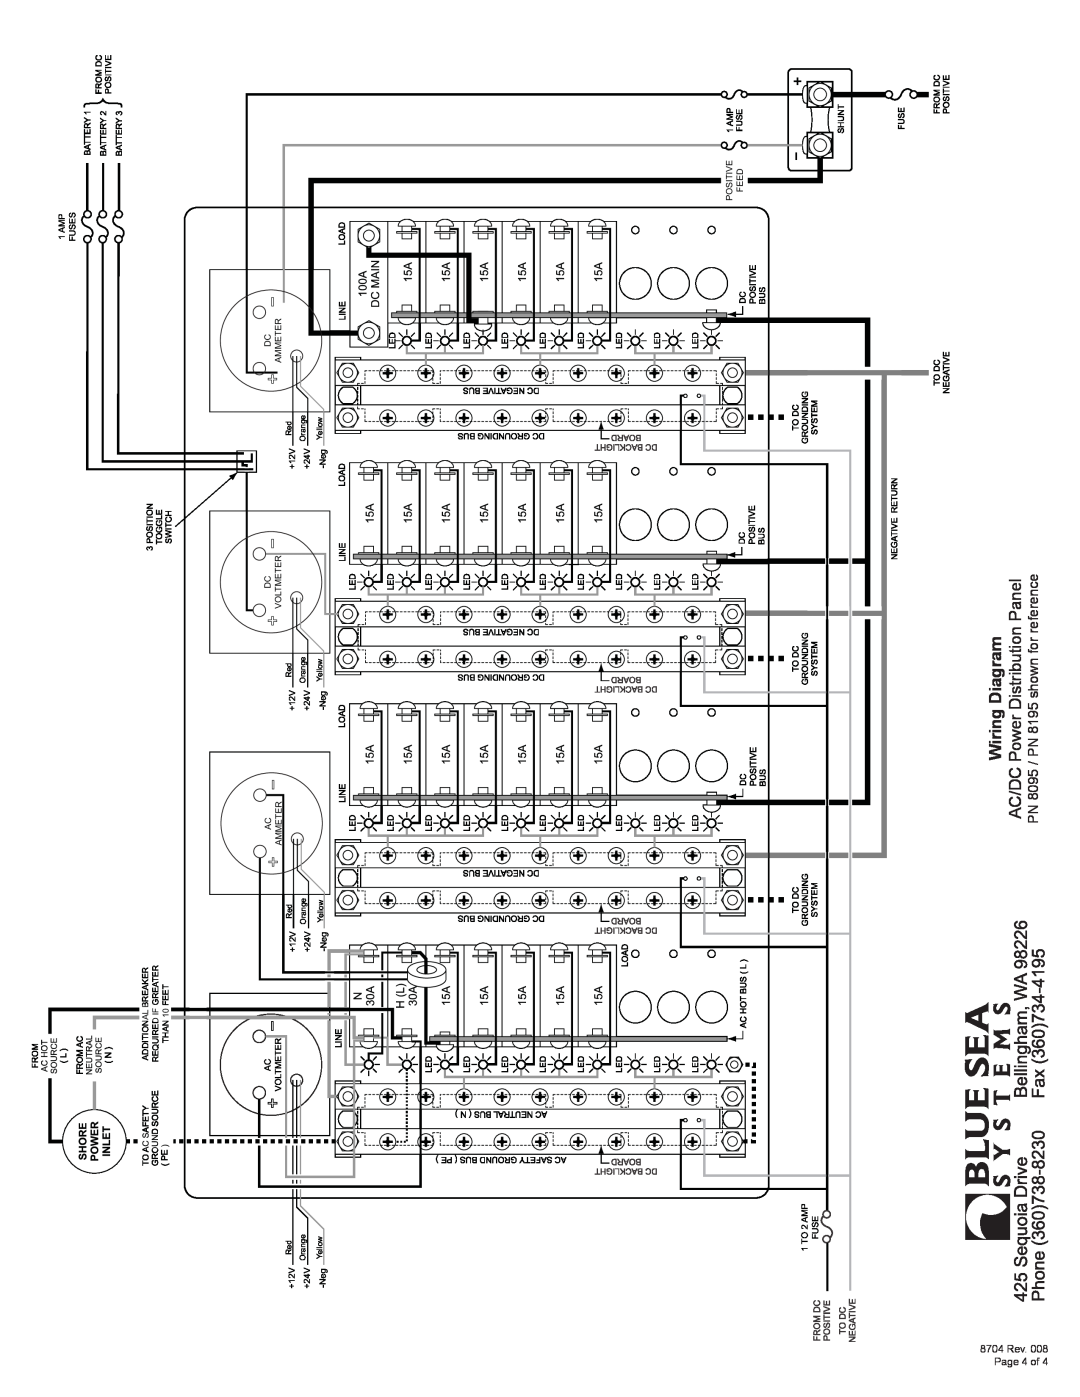 Blue Sea Systems PN 3195, PN 8195, PN 8095, PN 3095 dimensions Wiring Diagram, AC/DC Power Distribution Panel, Page, 8704 Rev 